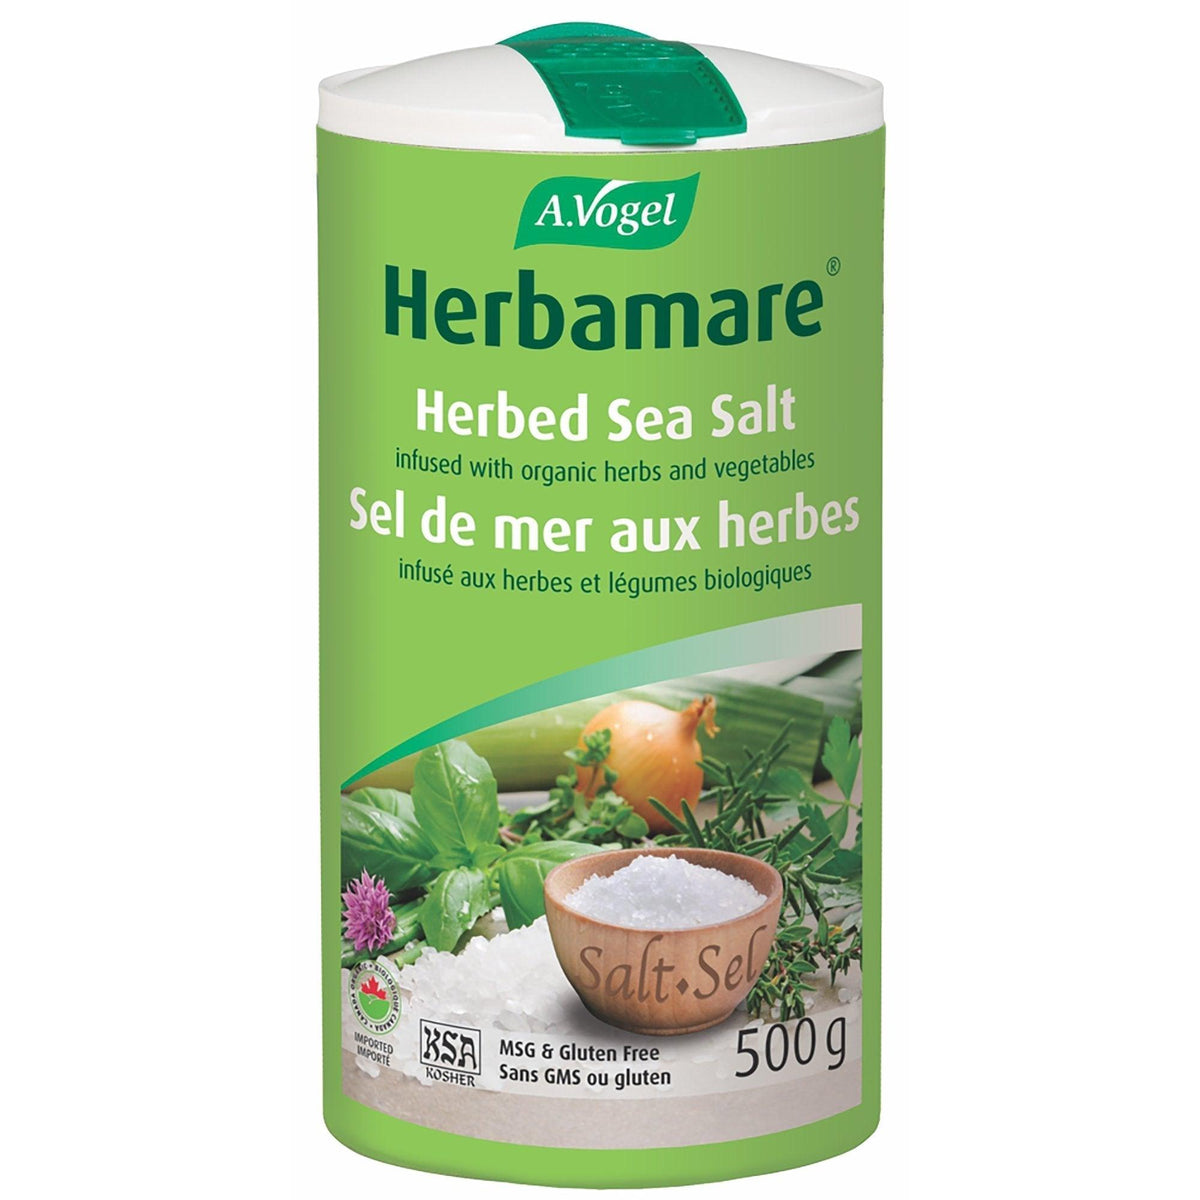 A. Vogel Organic Herbamare Herbed Sea Salt 500g Food Items at Village Vitamin Store